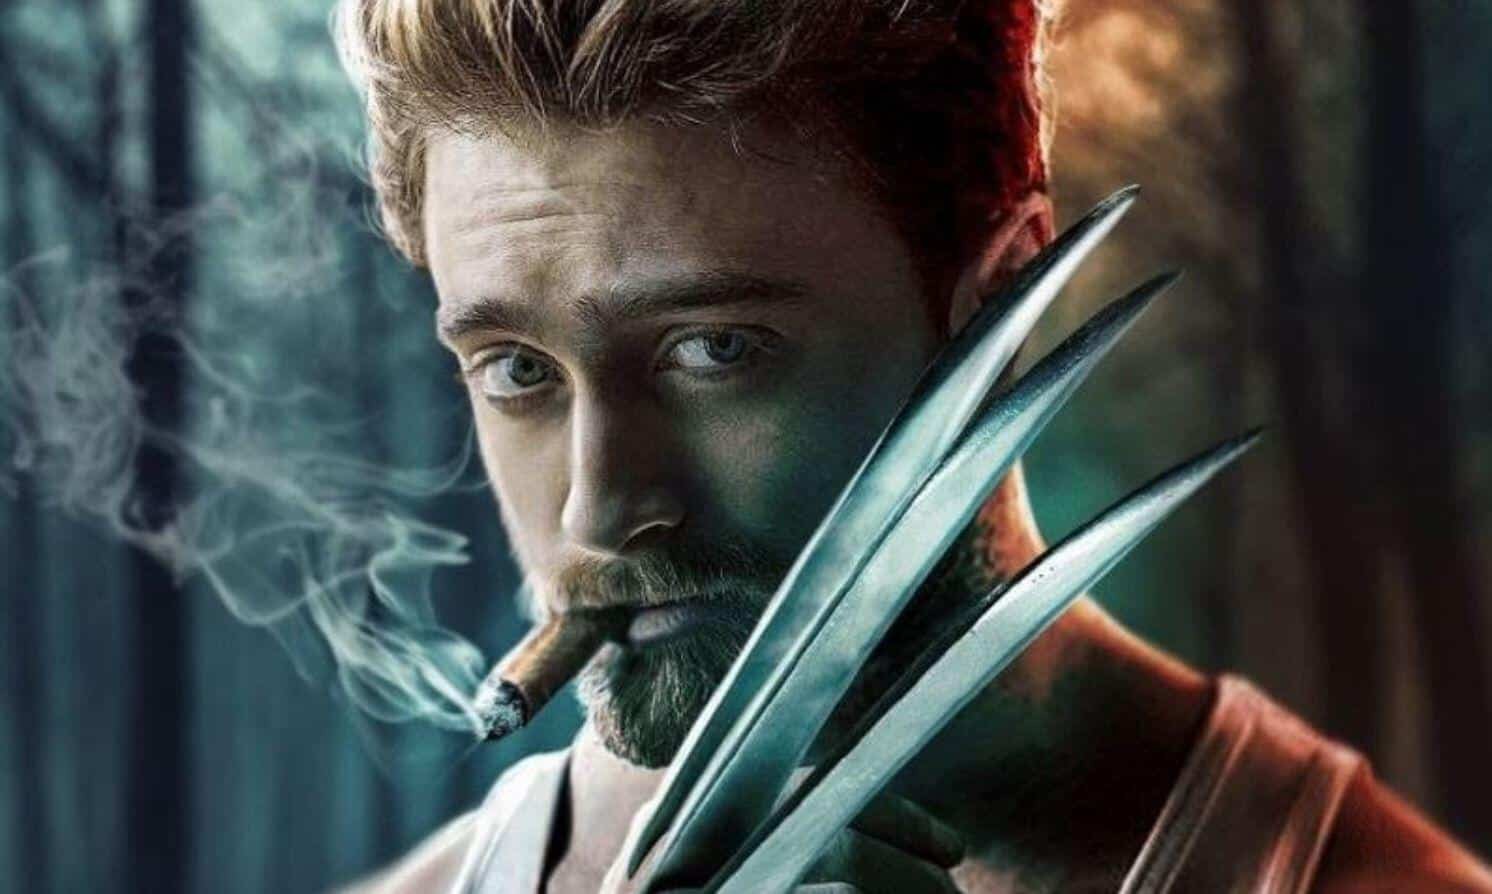 Fanart featuring Daniel Radcliffe as Wolverine